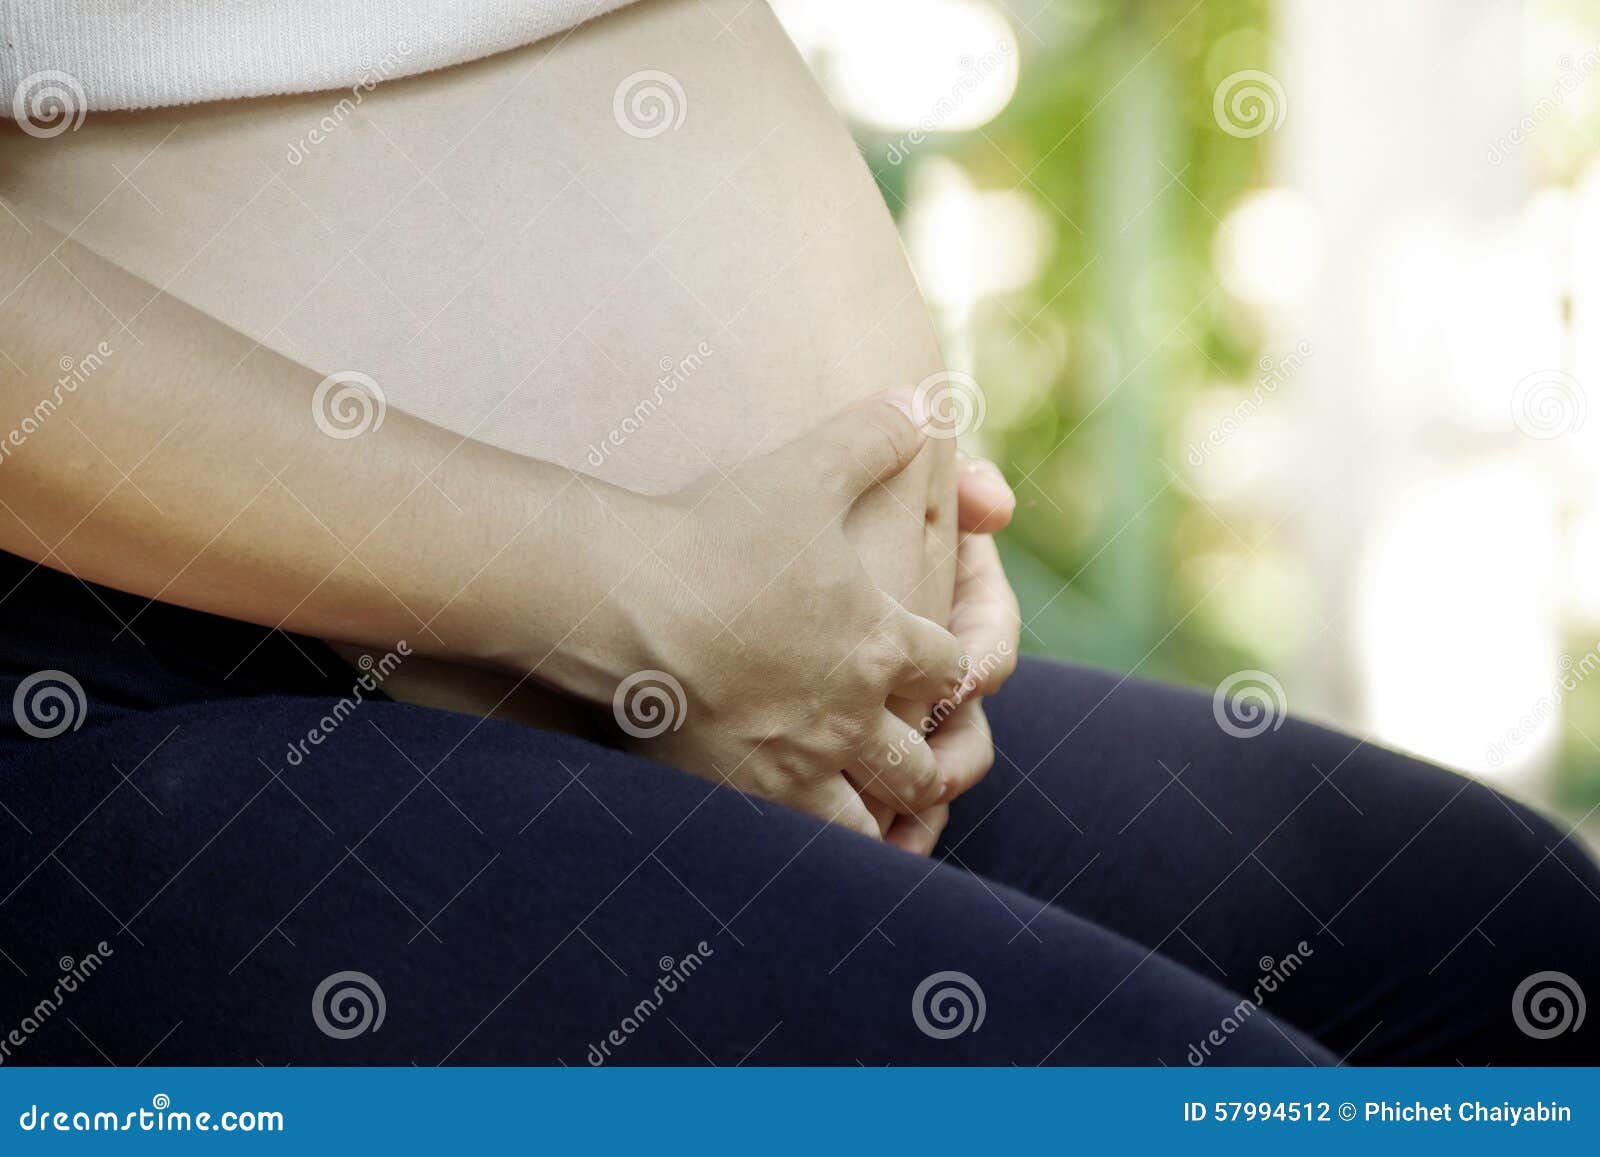 Meditative pregnancy yoga stock photo. Image of awaiting - 57994512